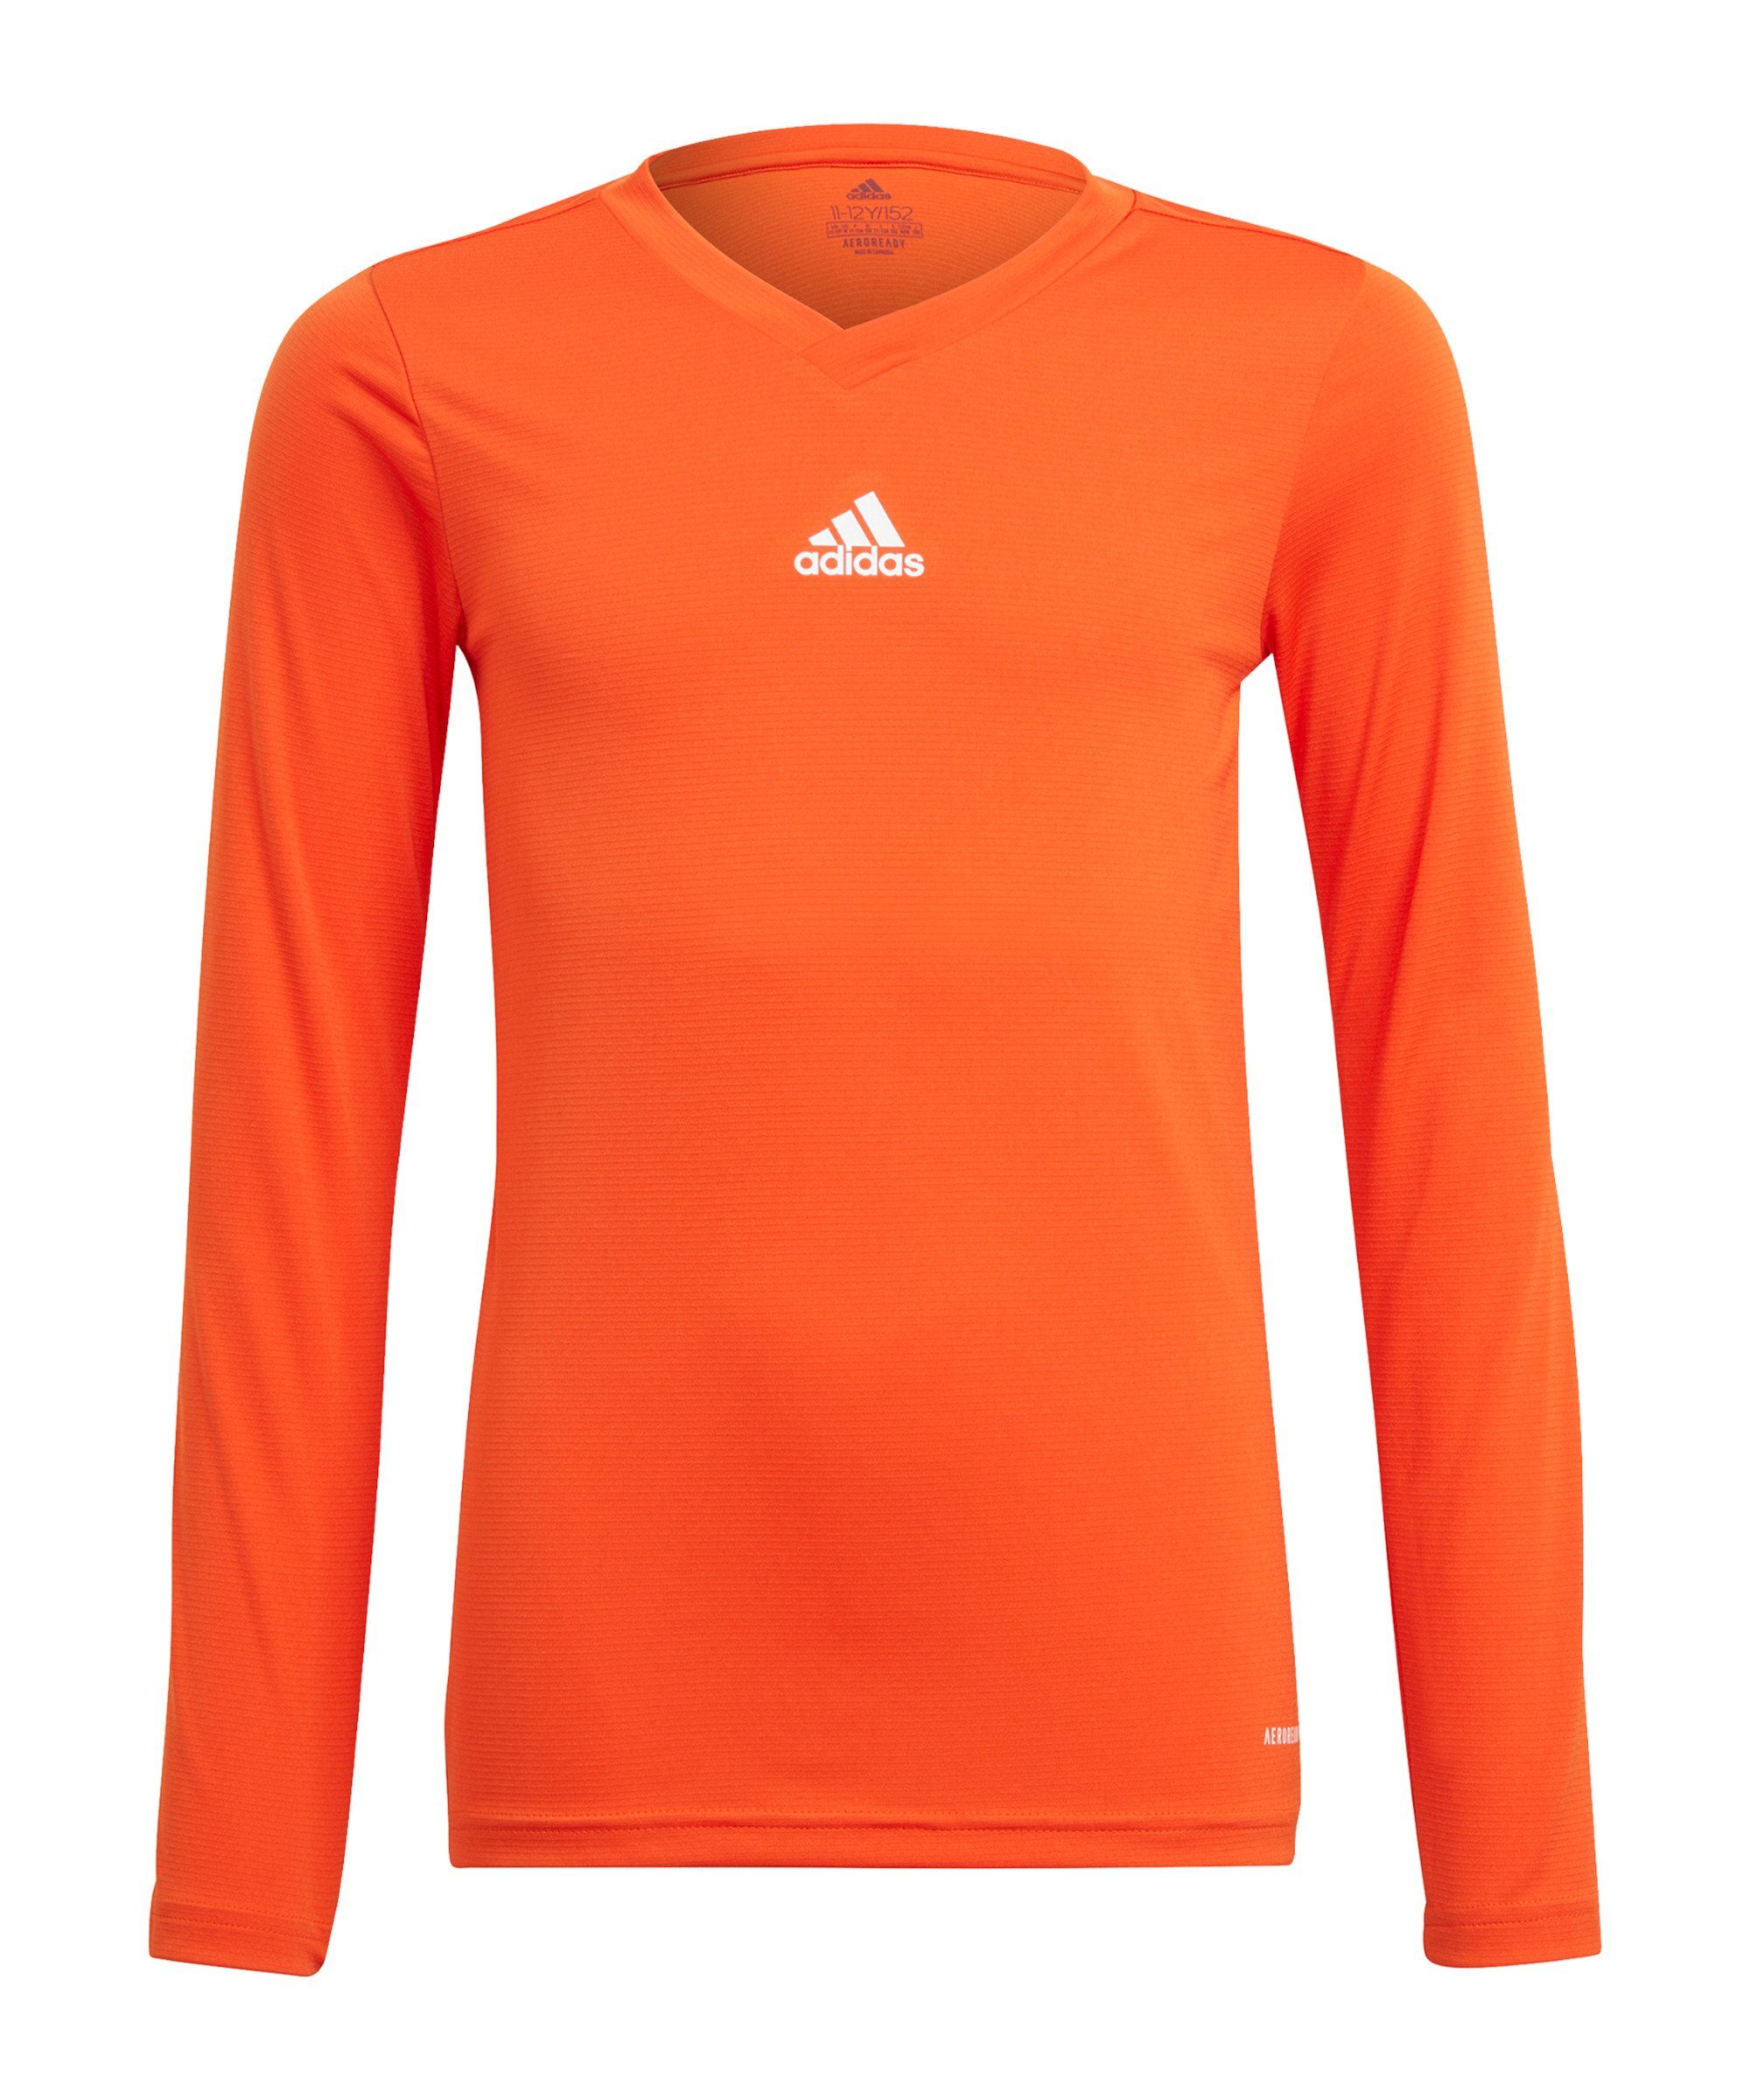 Kids default Performance Dunkel adidas Funktionsshirt Base Top orange langarm Team